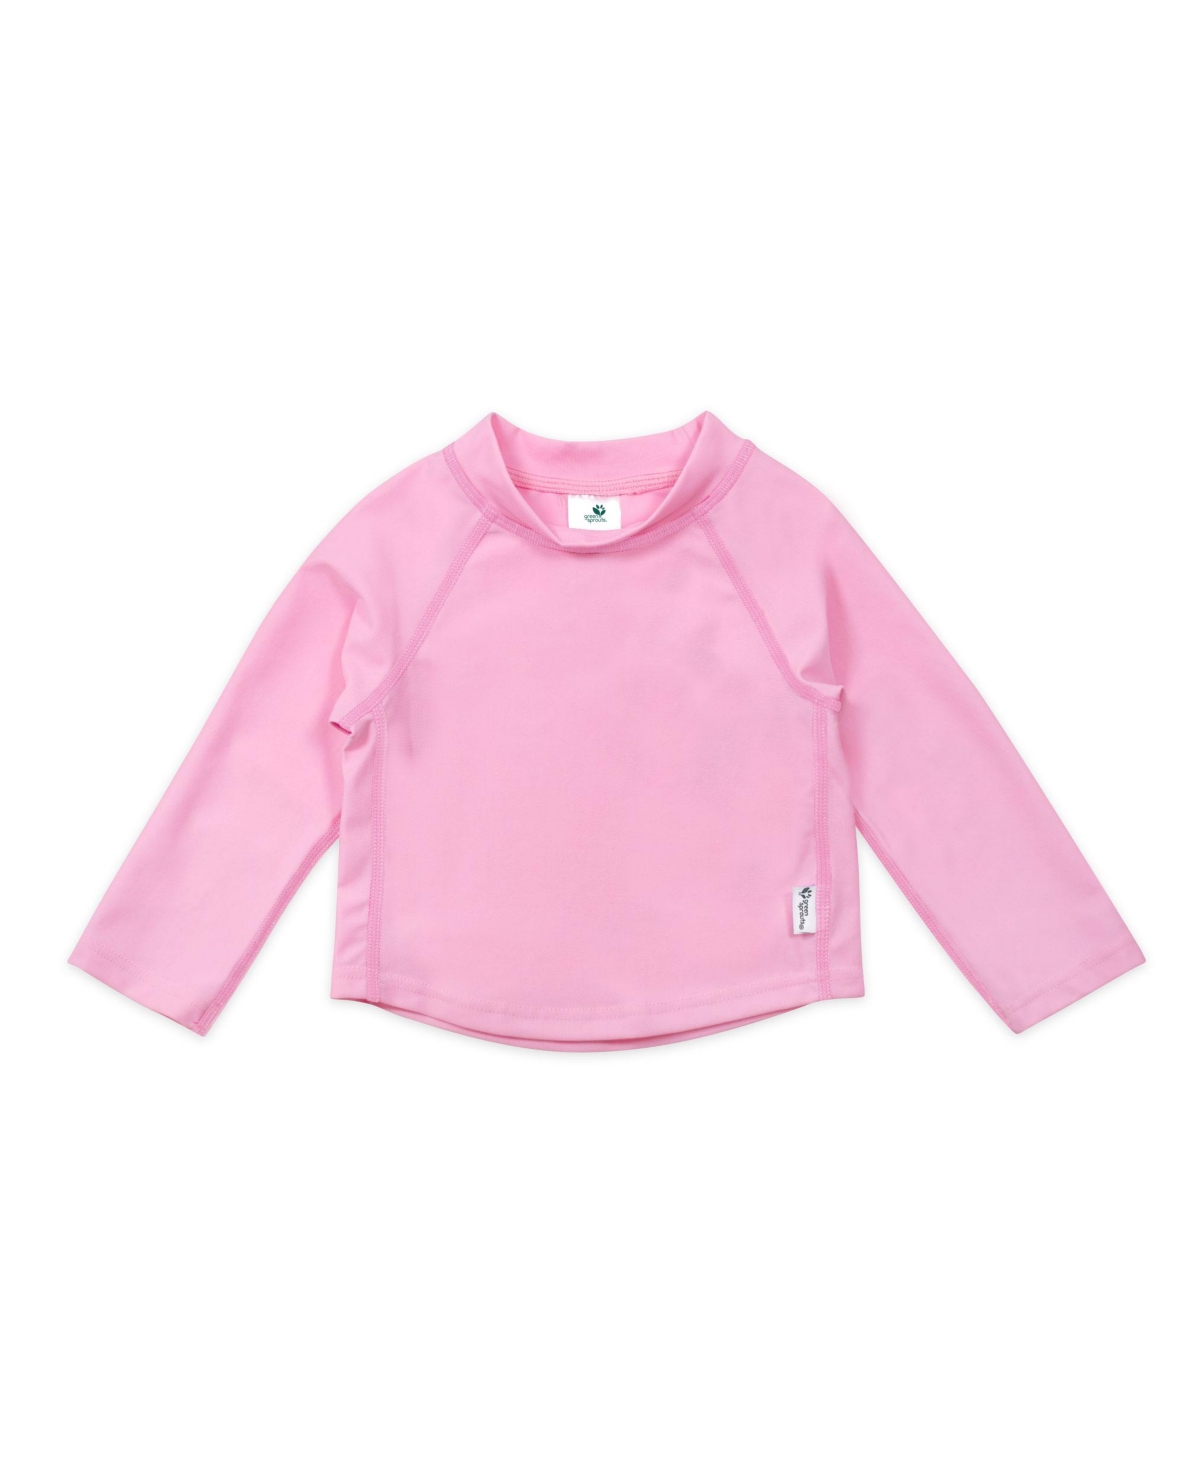 Green Sprouts Toddler Girls Long Sleeve Rashgaurd Shirt In Light Pink